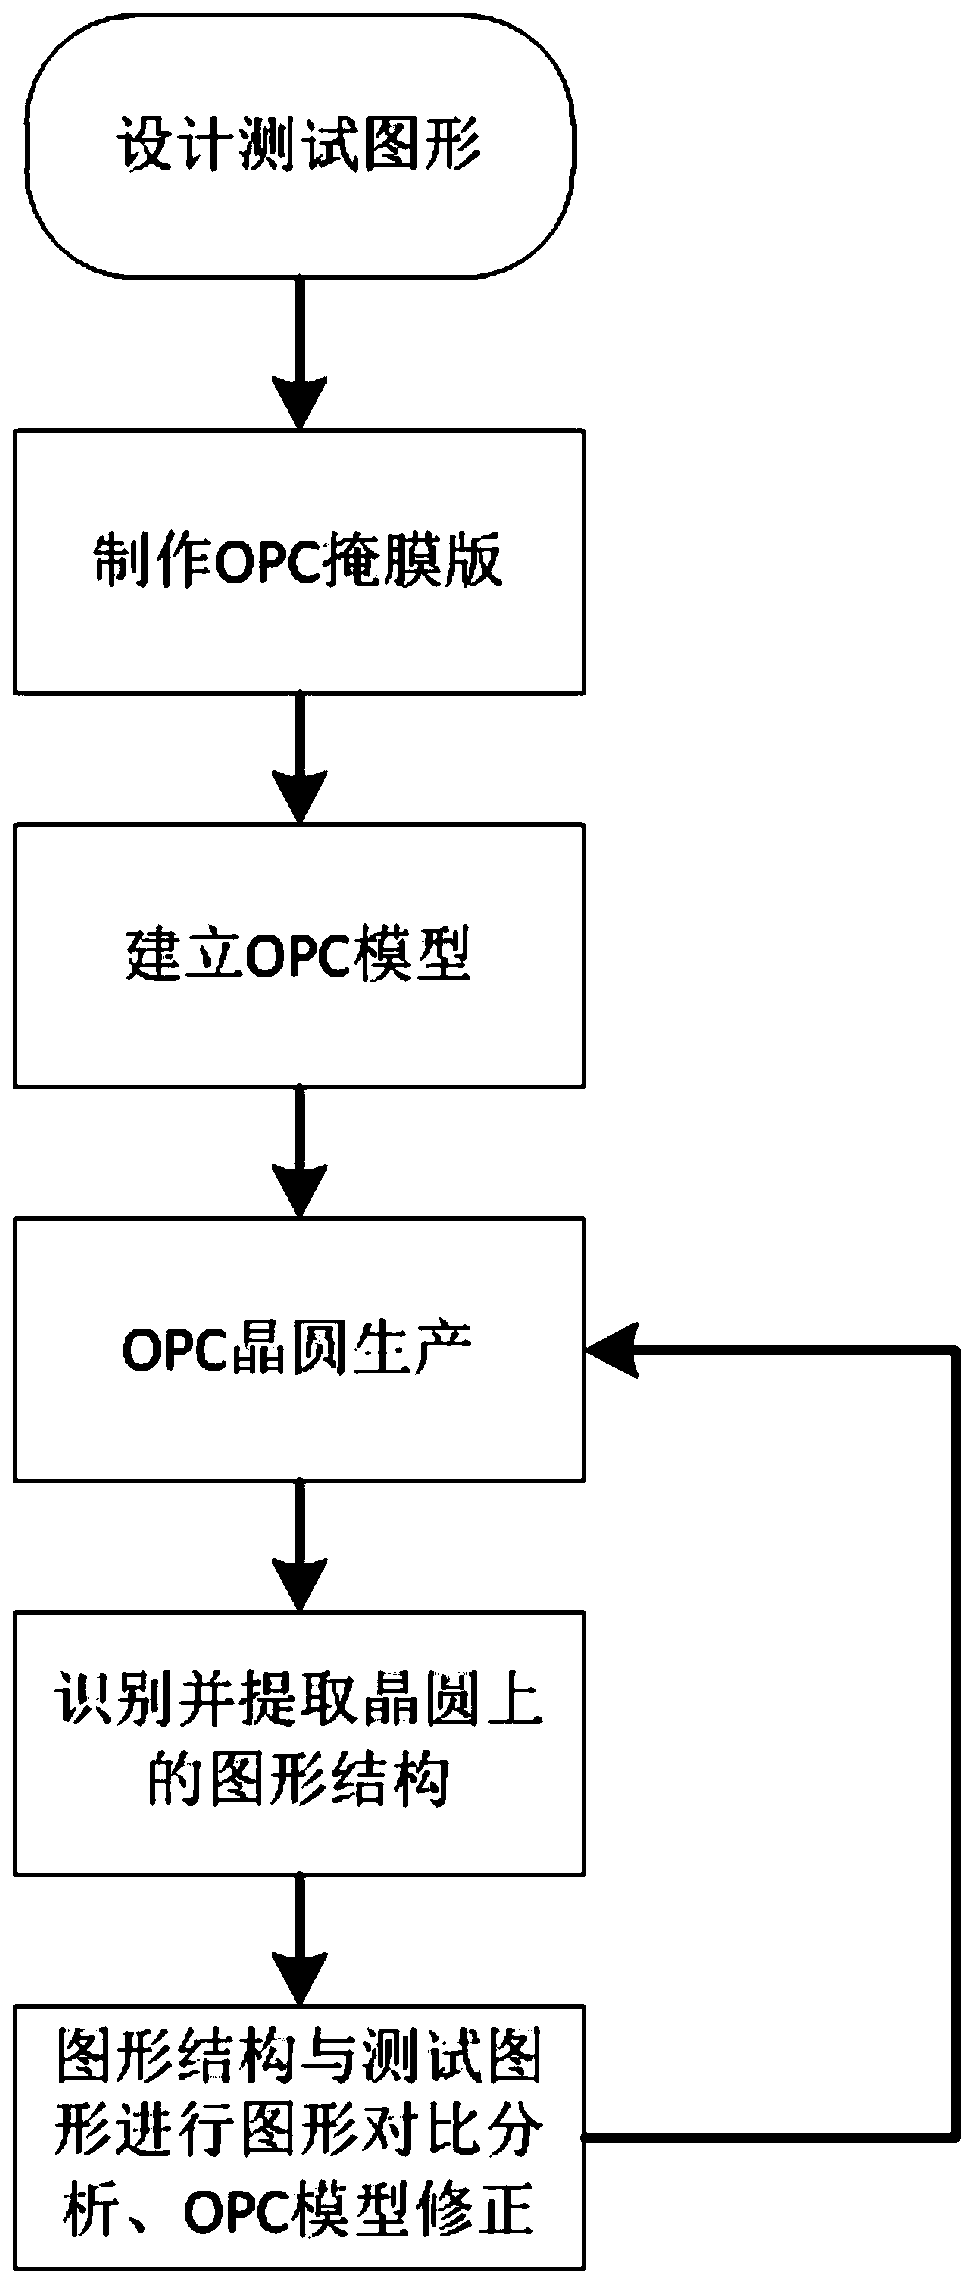 Novel method for correcting OPC model